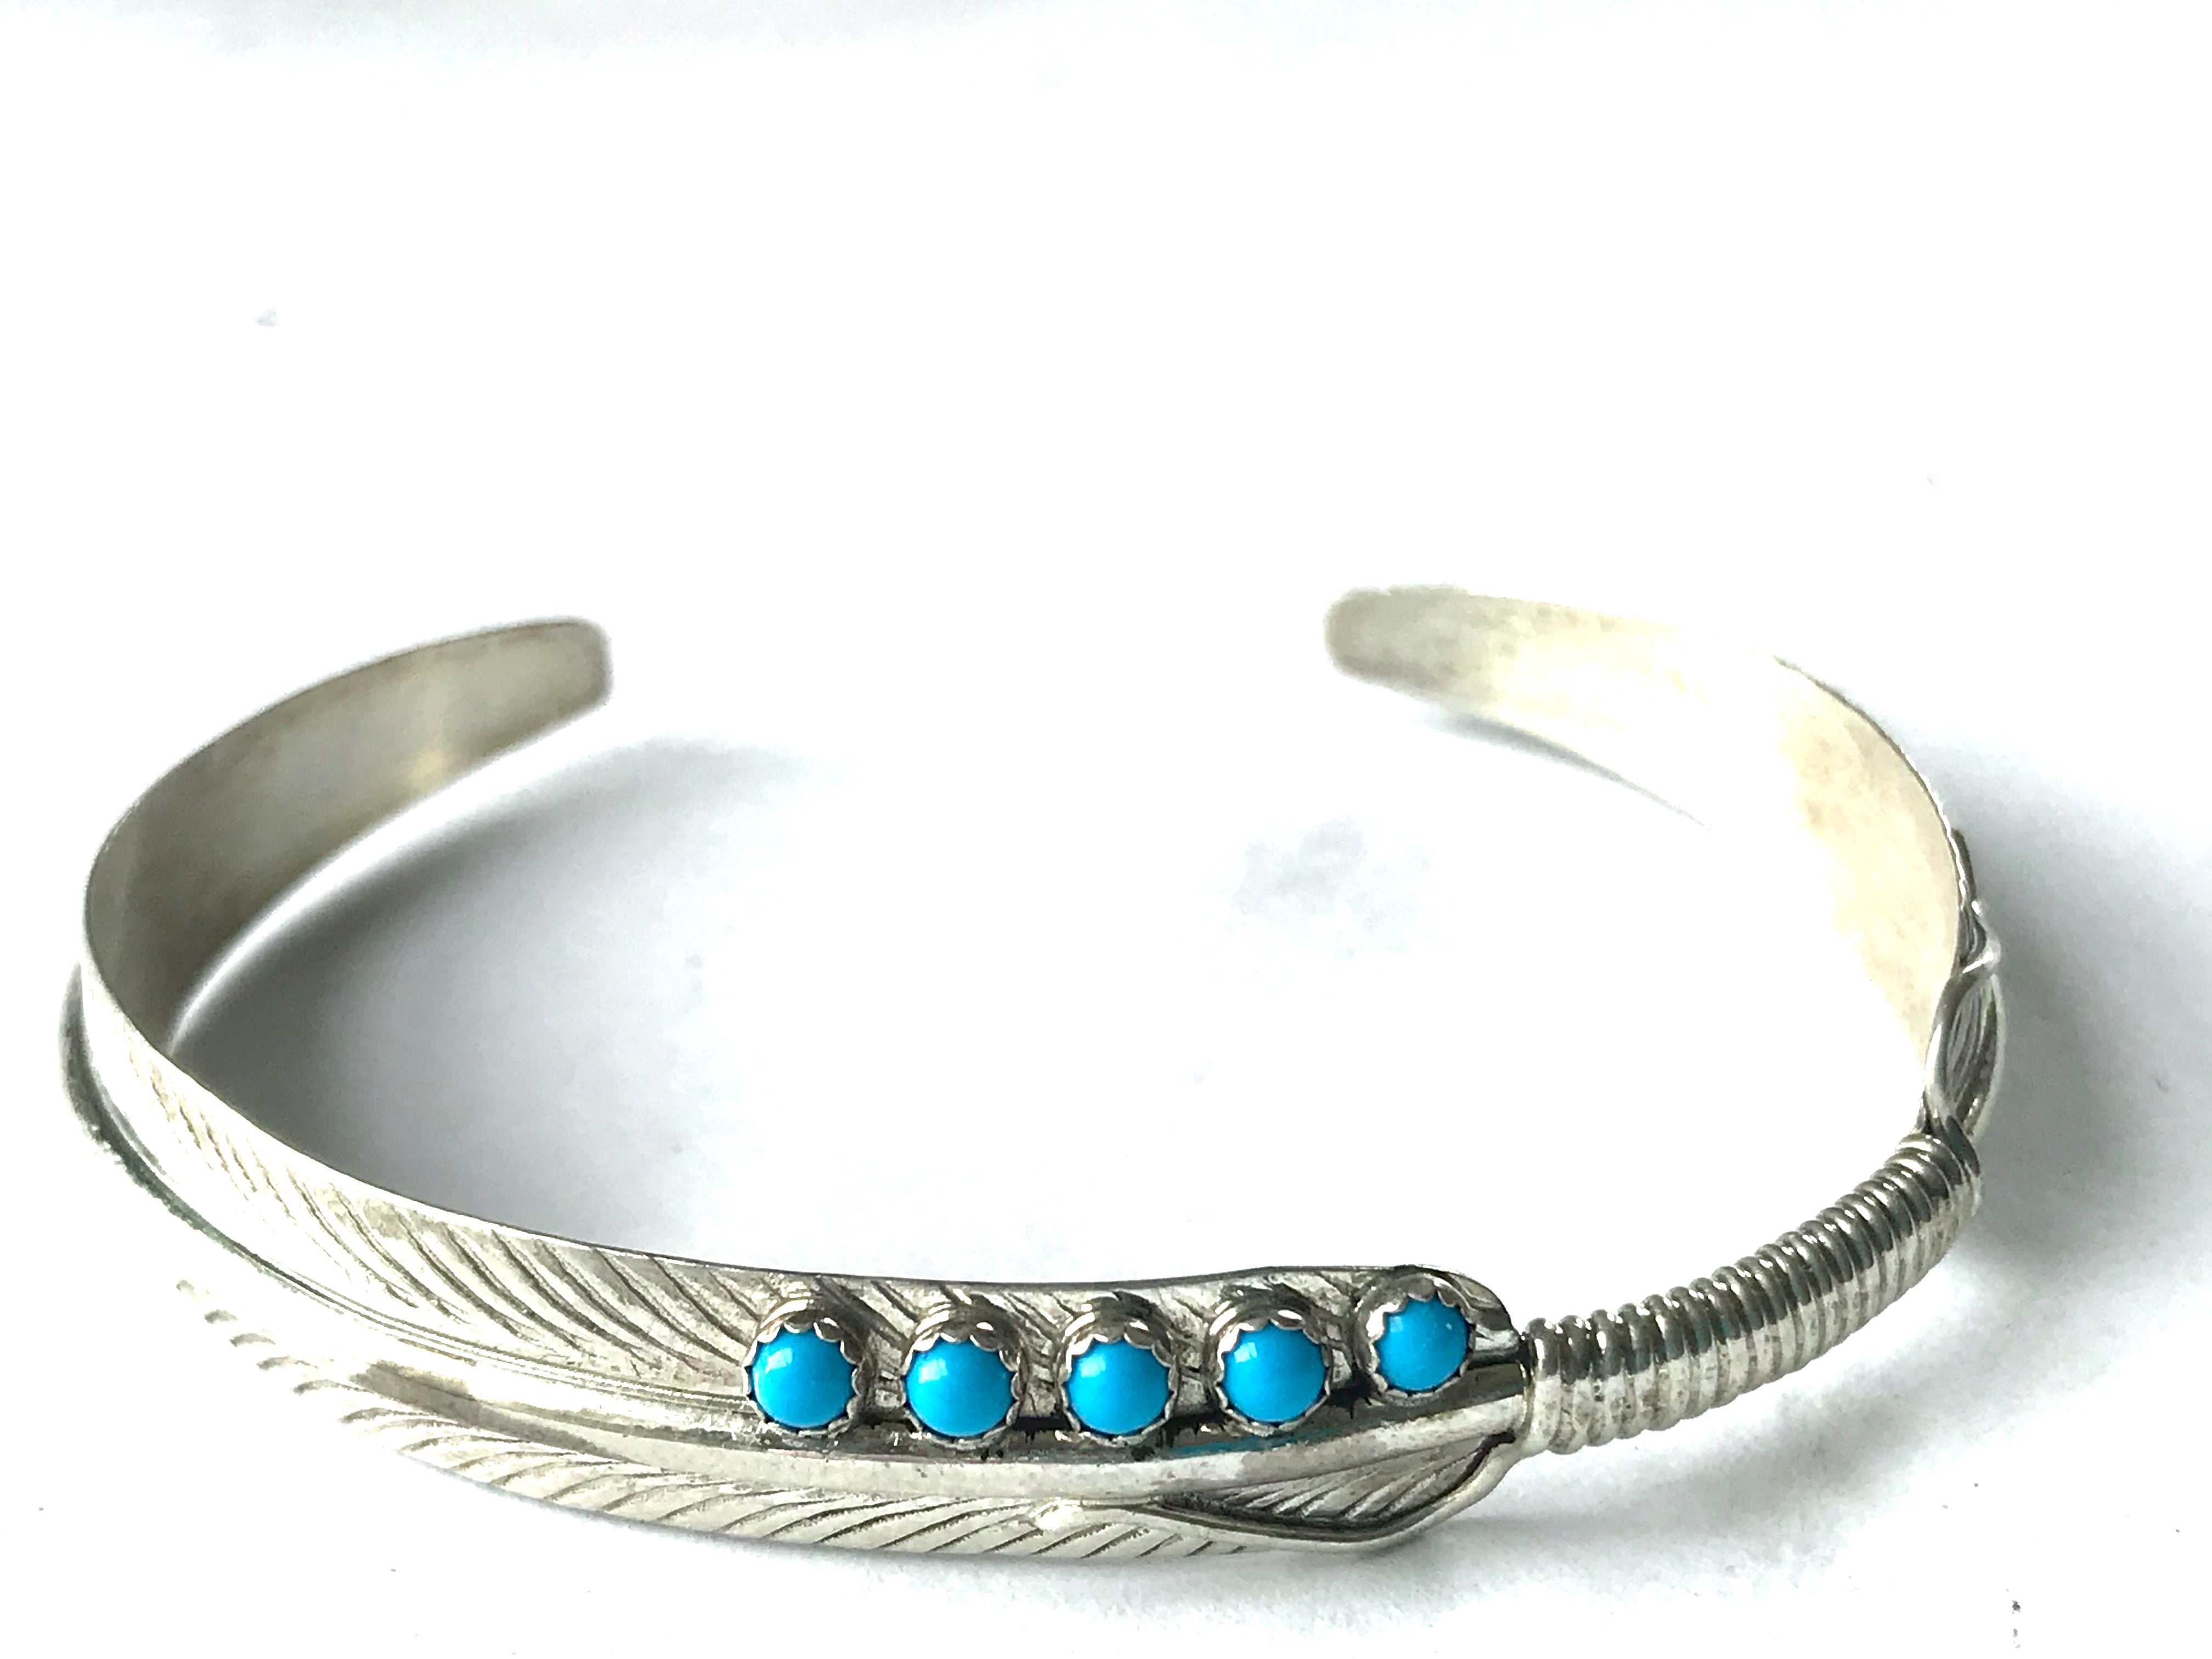 Feather sterling silver bracelet